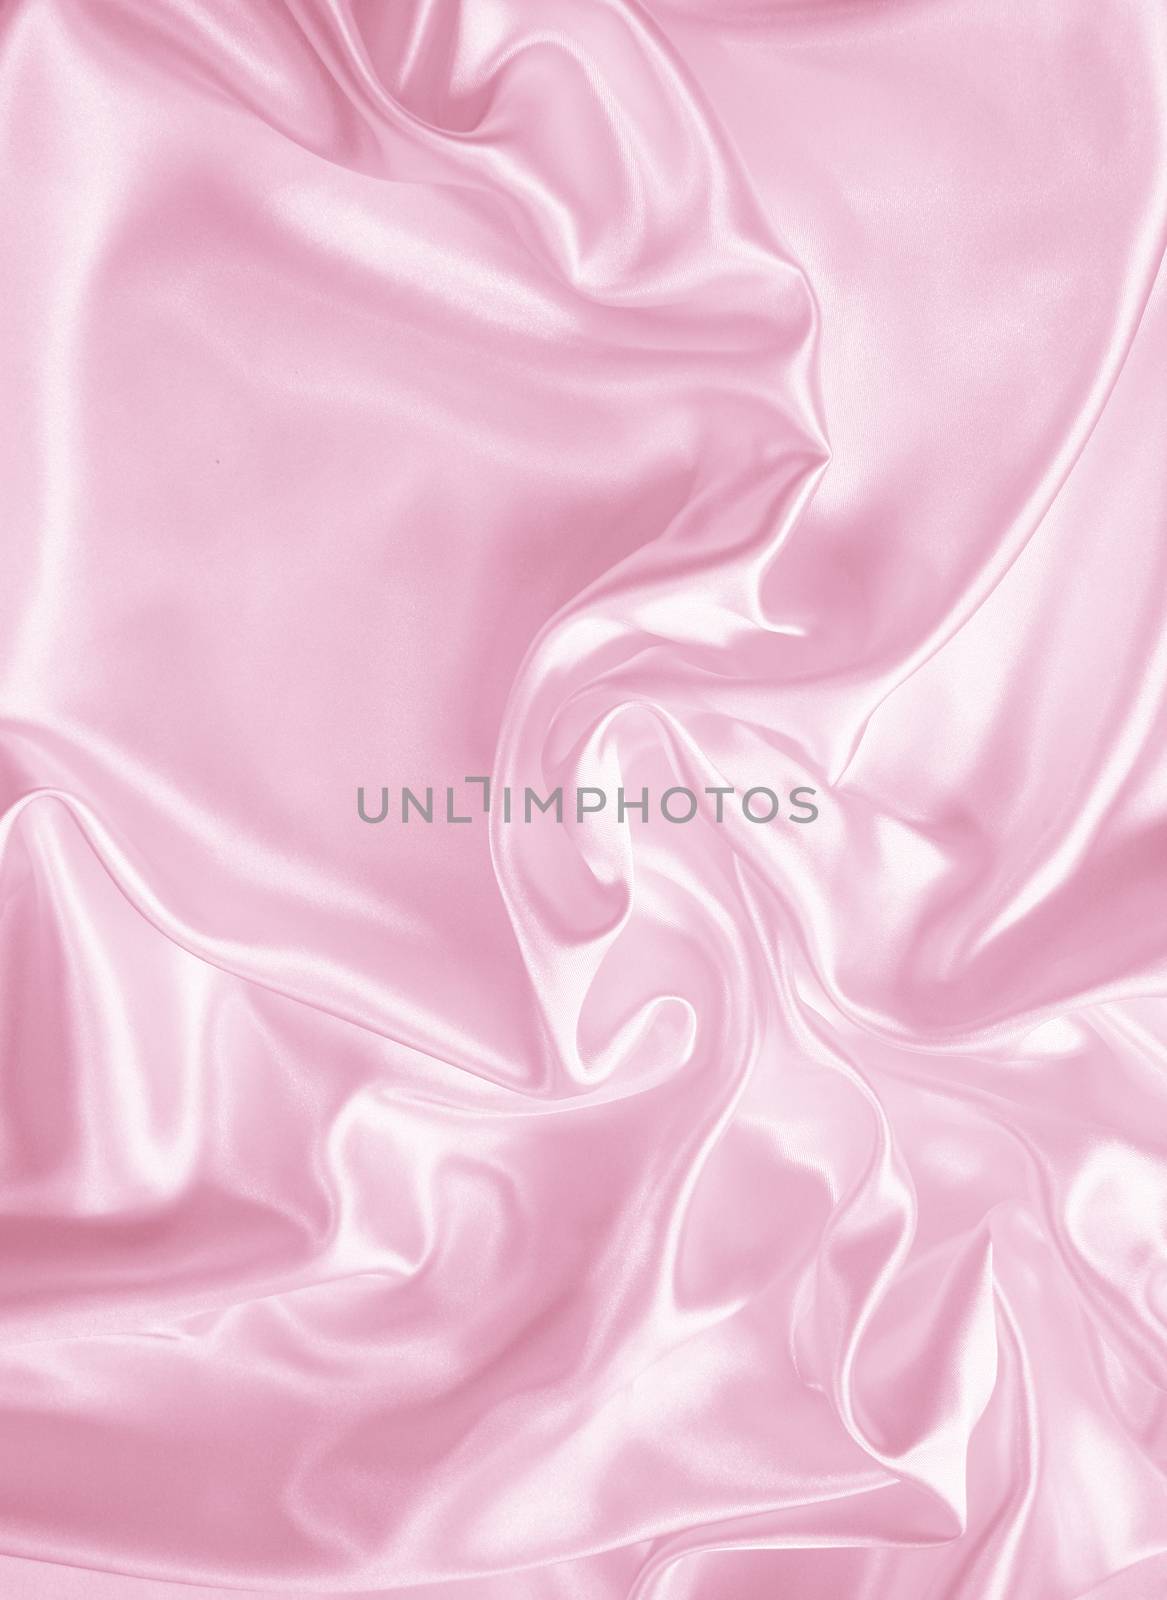 Smooth elegant pink silk as wedding background by oxanatravel